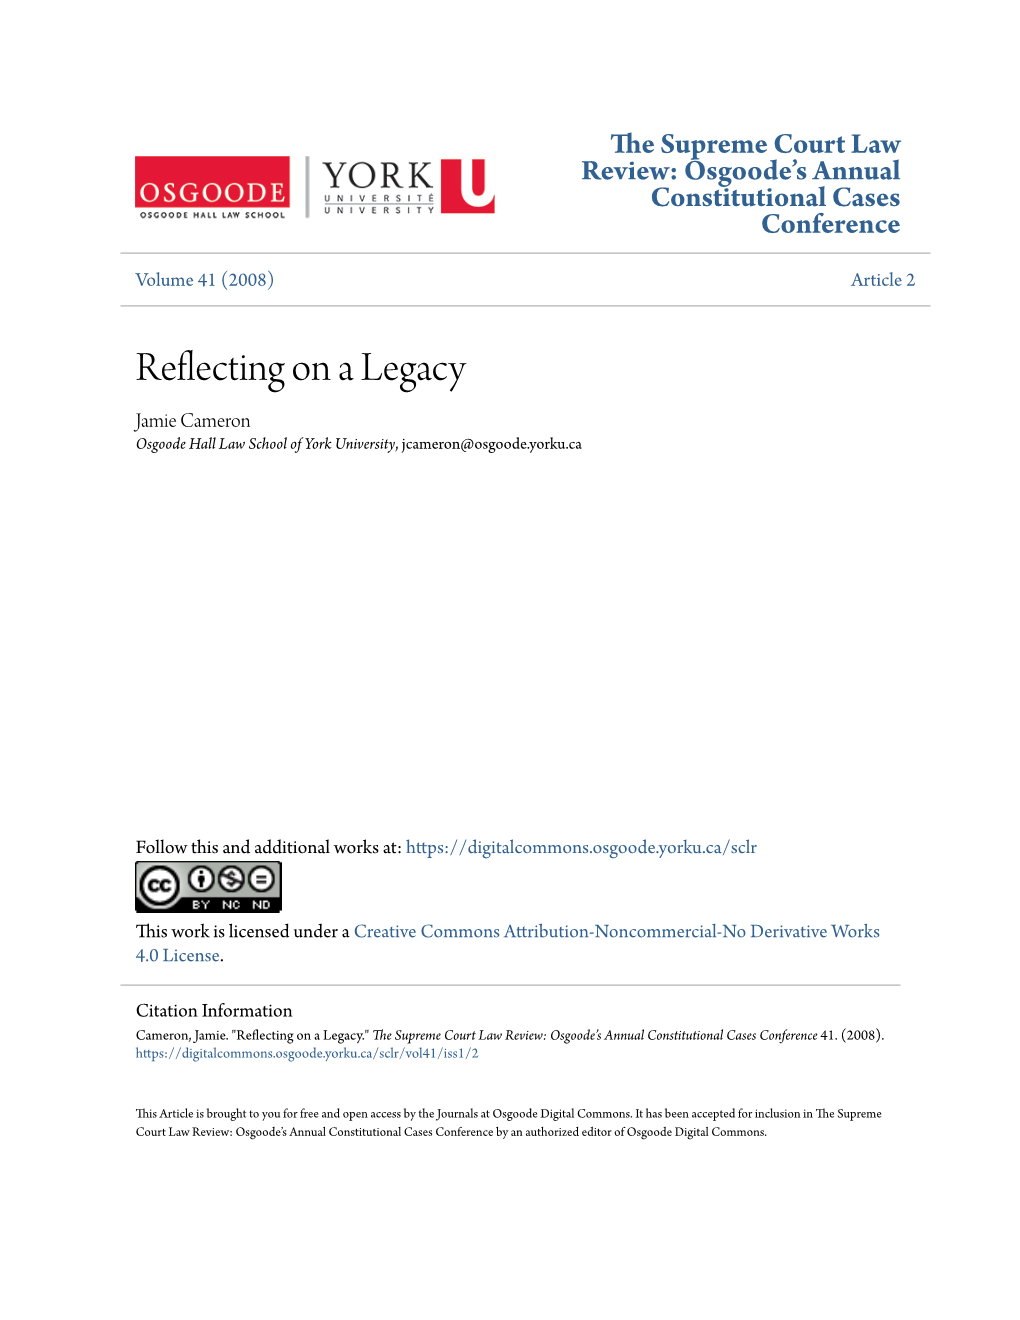 Reflecting on a Legacy Jamie Cameron Osgoode Hall Law School of York University, Jcameron@Osgoode.Yorku.Ca